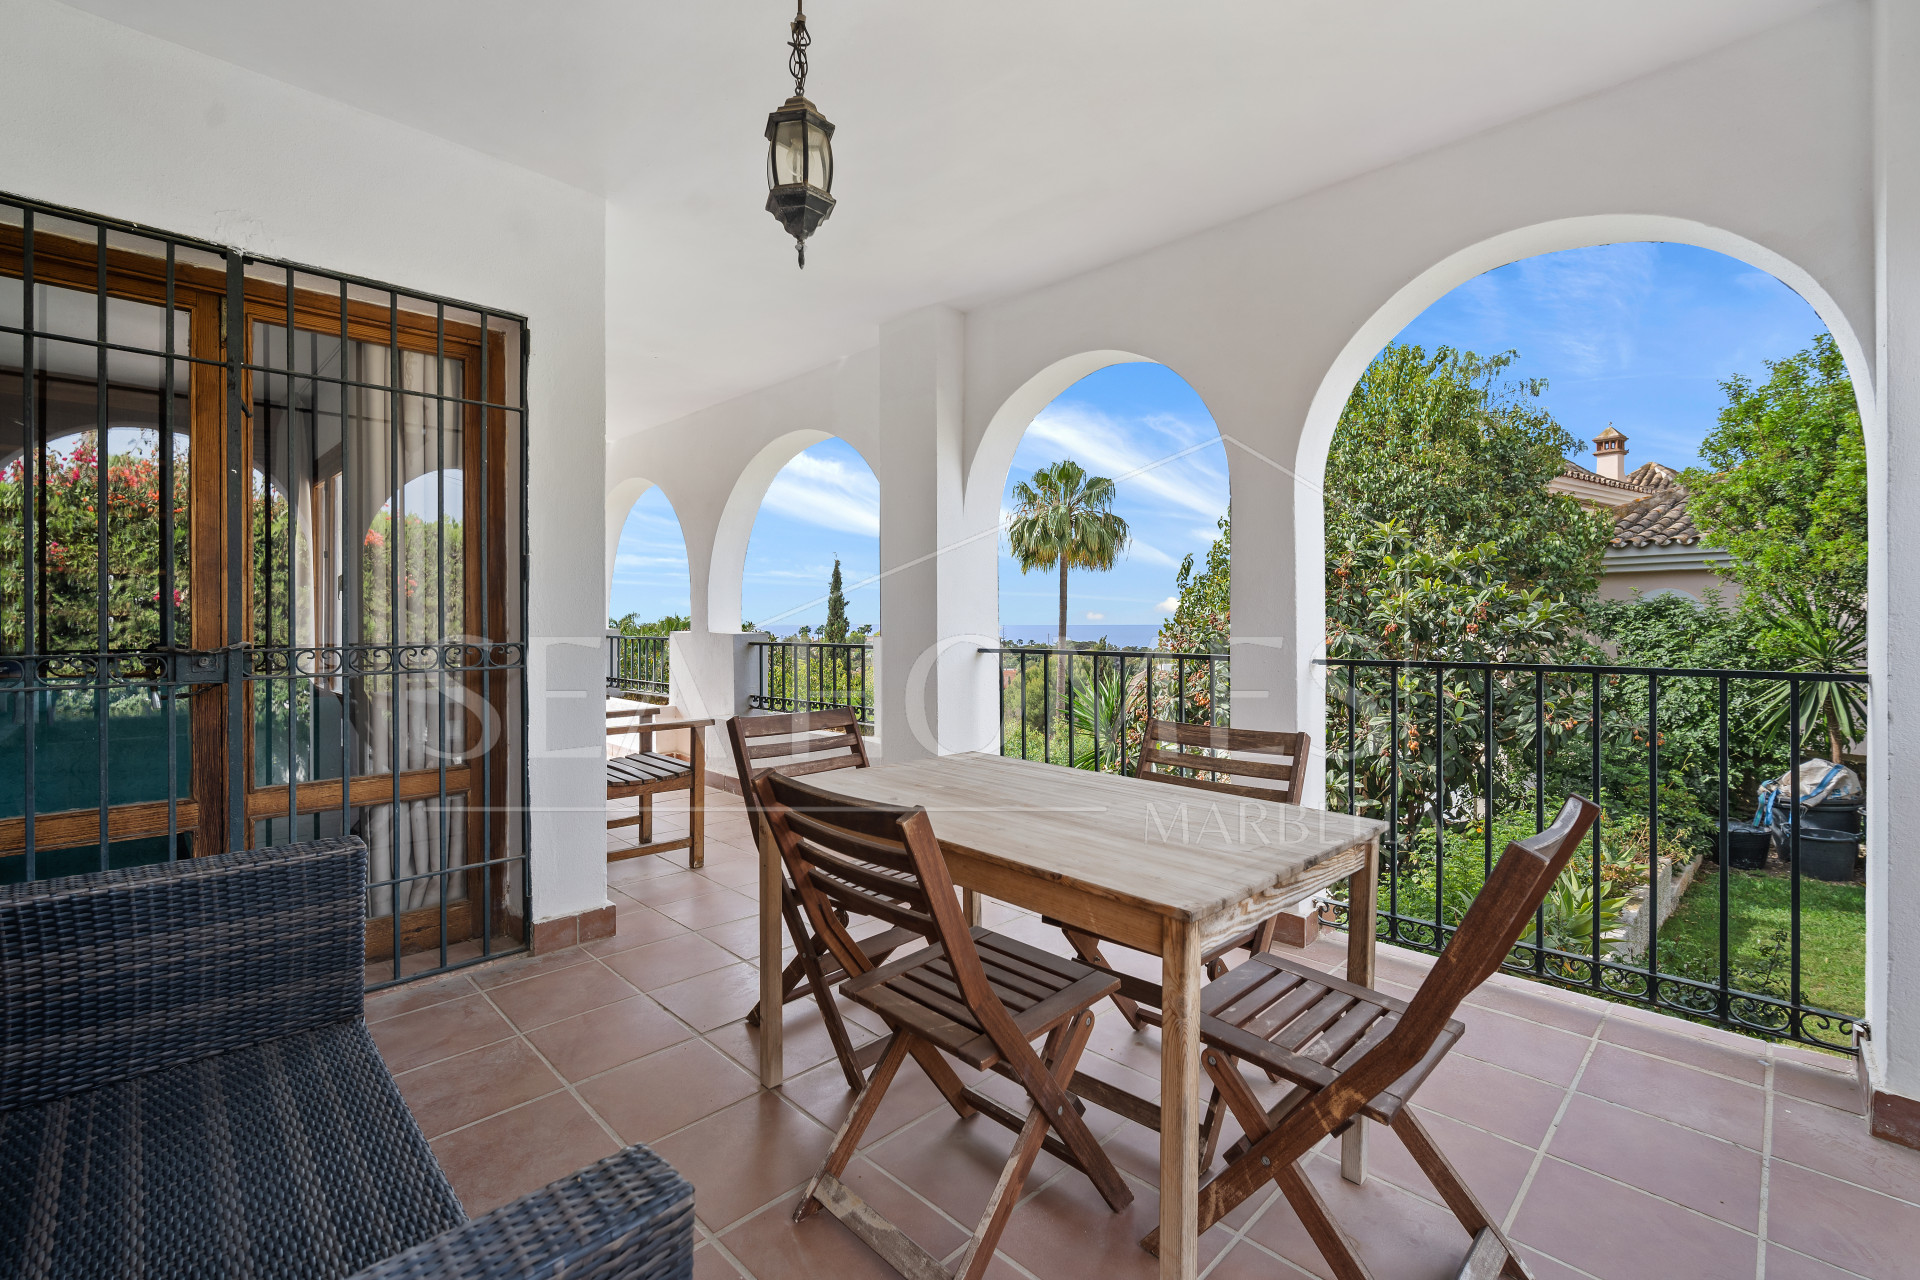 South East Facing Six Bedroom Villa in El Rosario, close to the beach with sea views - fantastic opportunity!